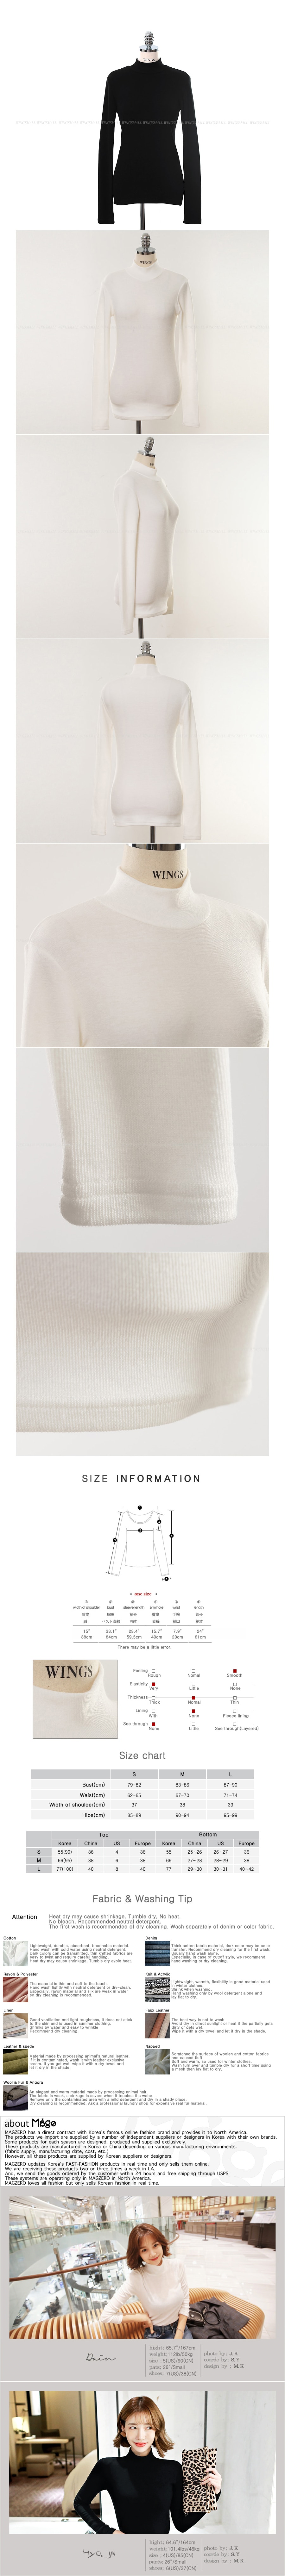 [韩国正品] Ribbed Knit Turtleneck Top #Black One Size(S-M) [免费配送]